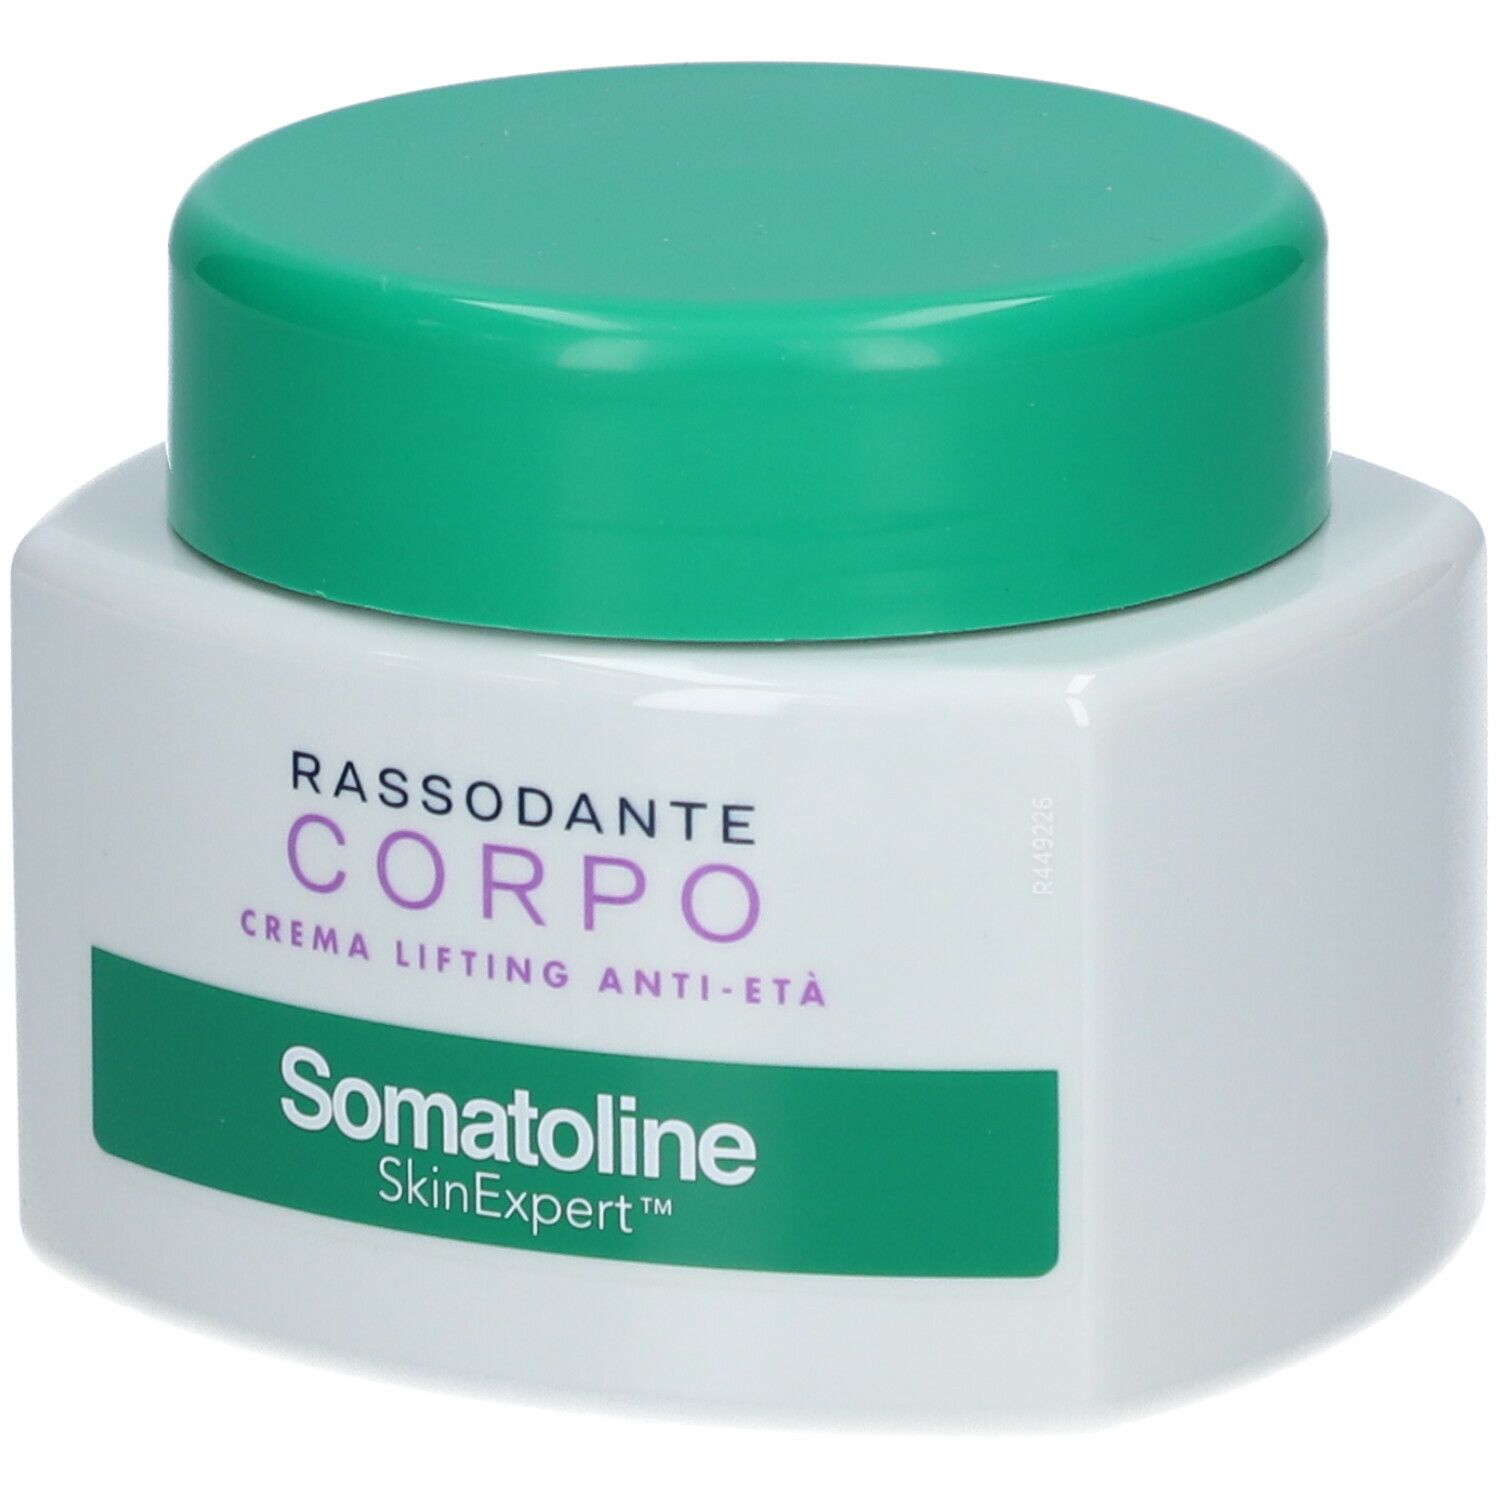 Somatoline Cosmetic® Anti-Age Lift Effect Rassodante Over 50